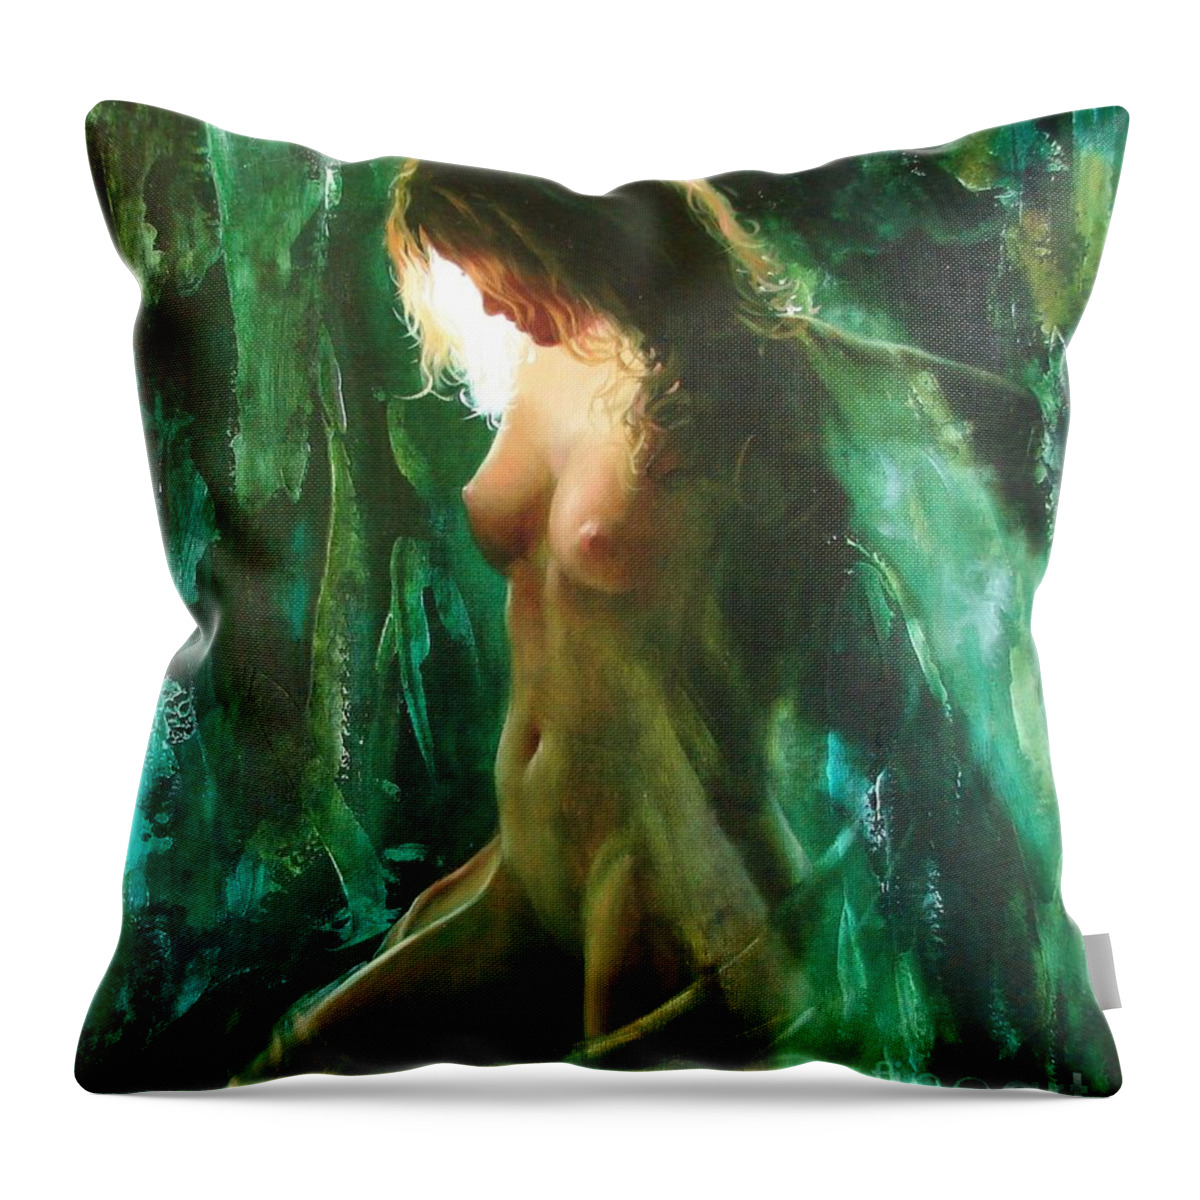 Art Throw Pillow featuring the painting The malachite light by Sergey Ignatenko